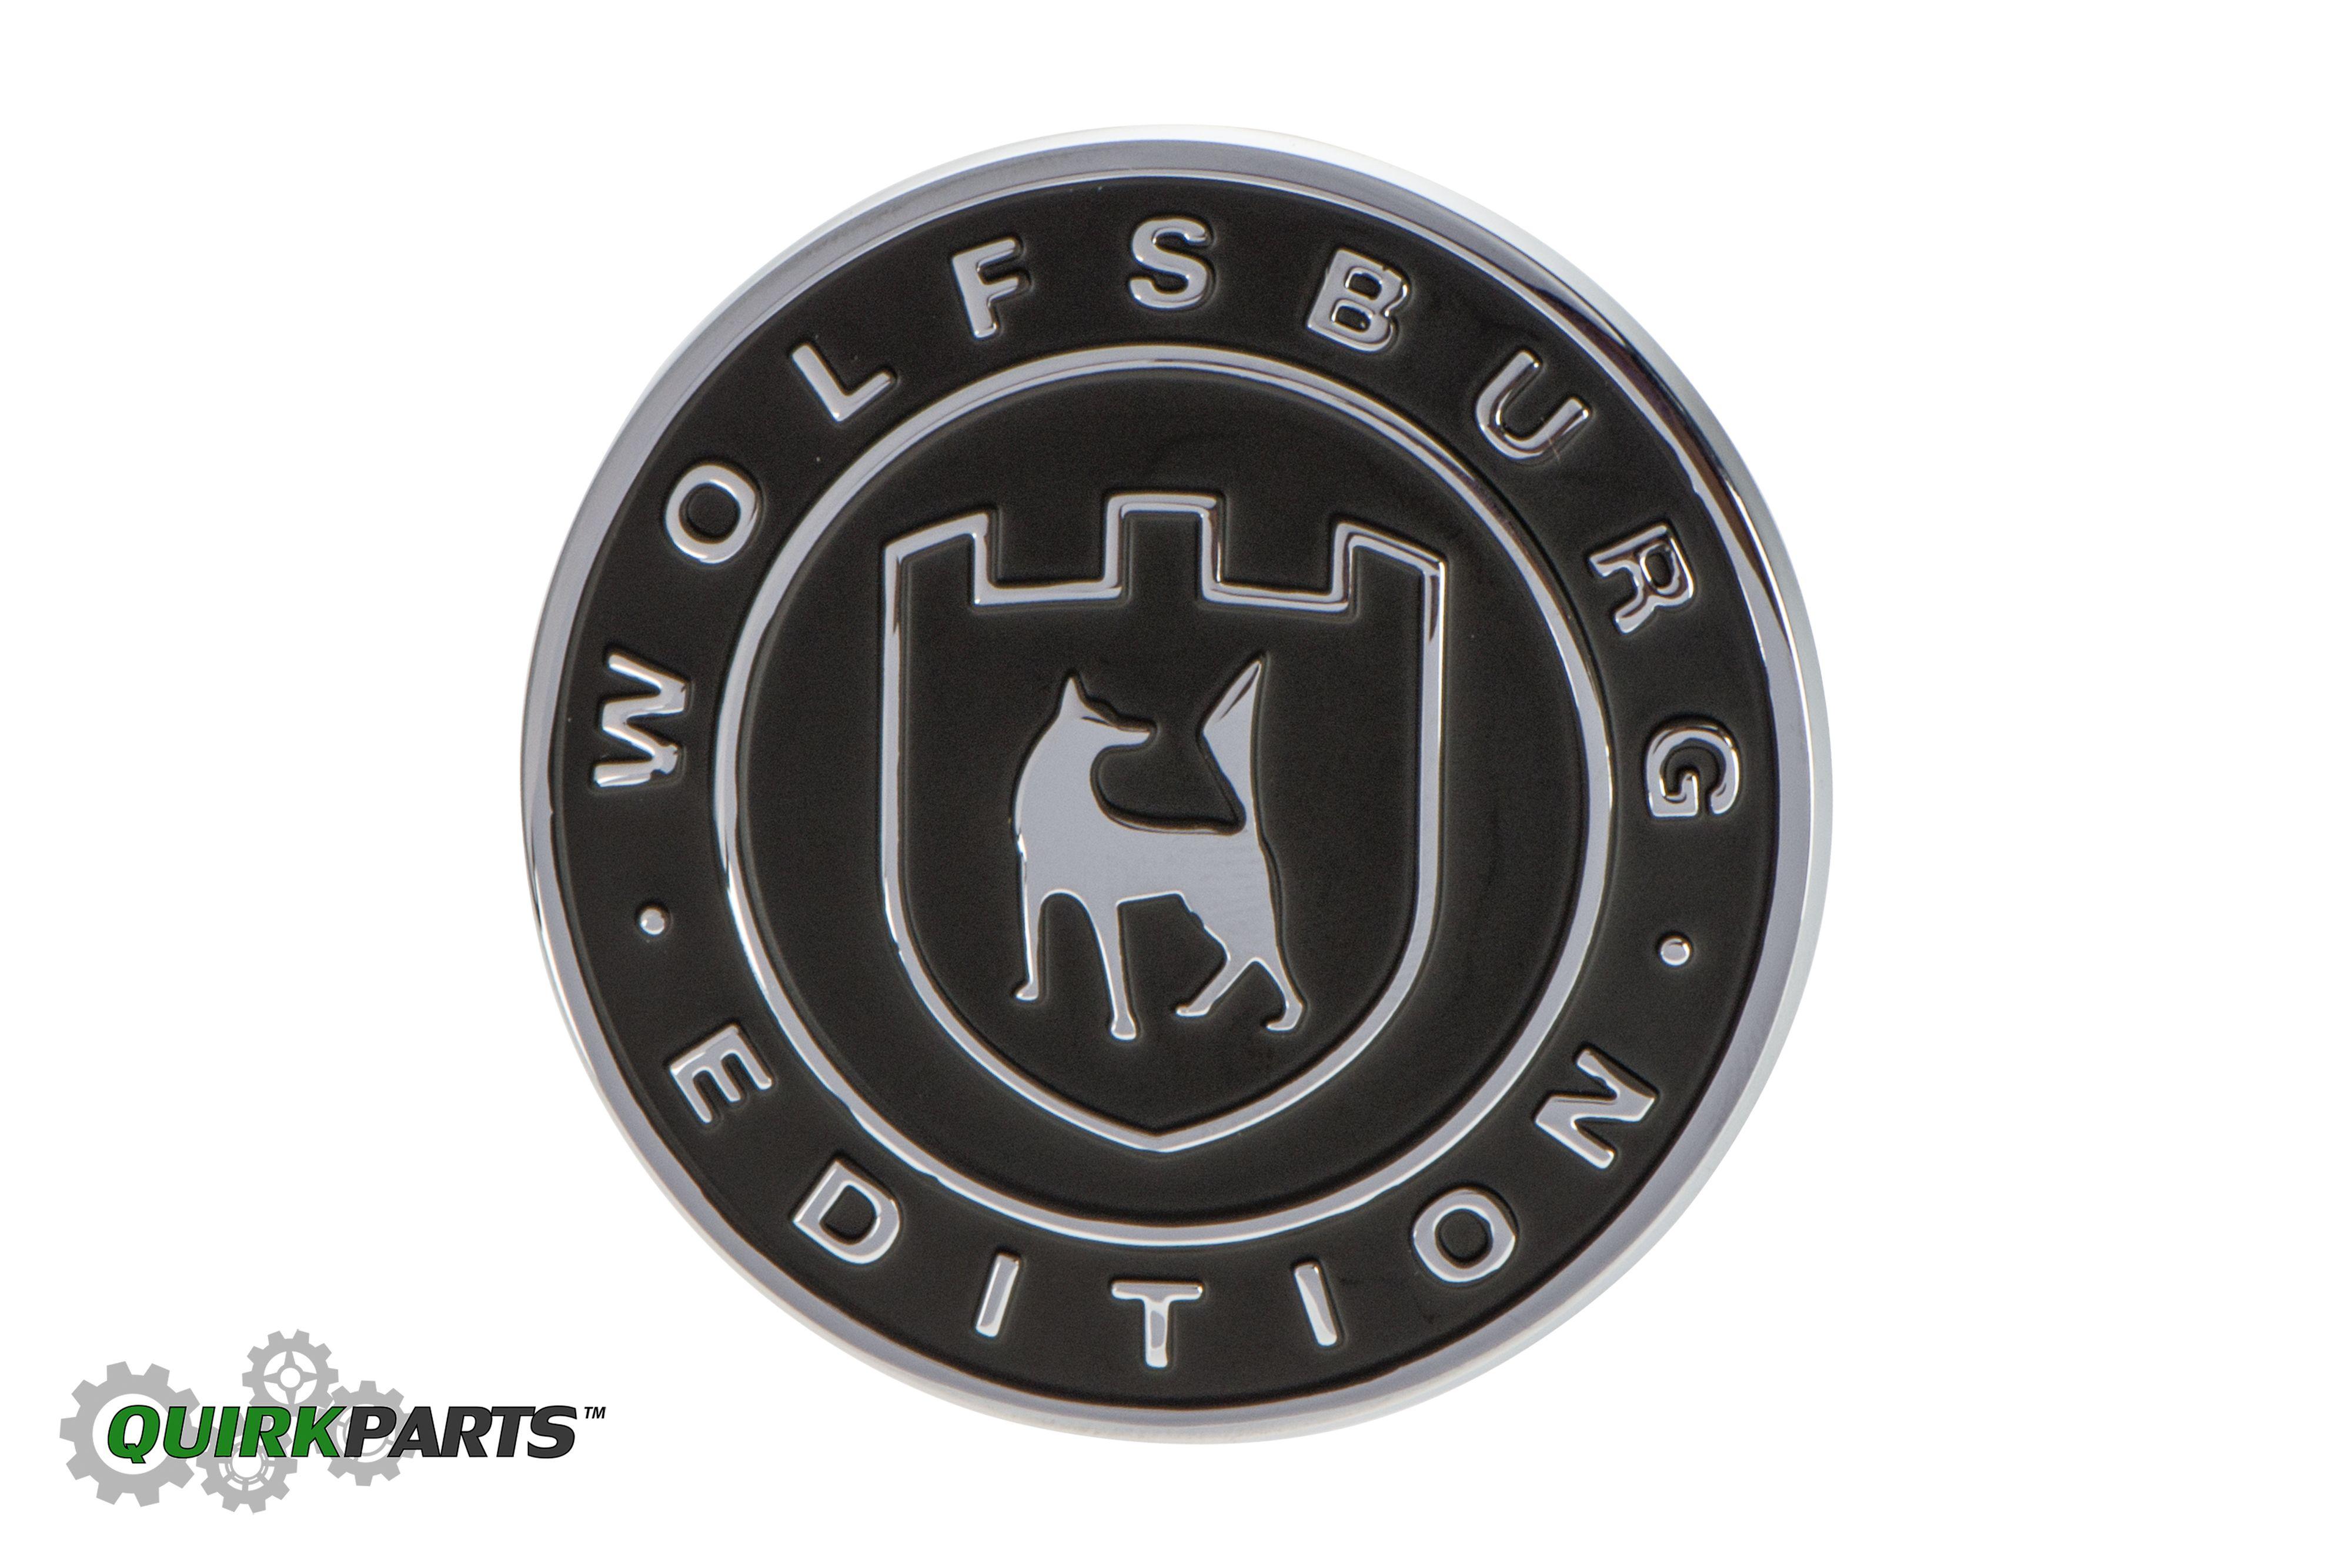 VW Wolf Logo - VWVortex.com - Replace rear VW logo with Wolfsburg badge??